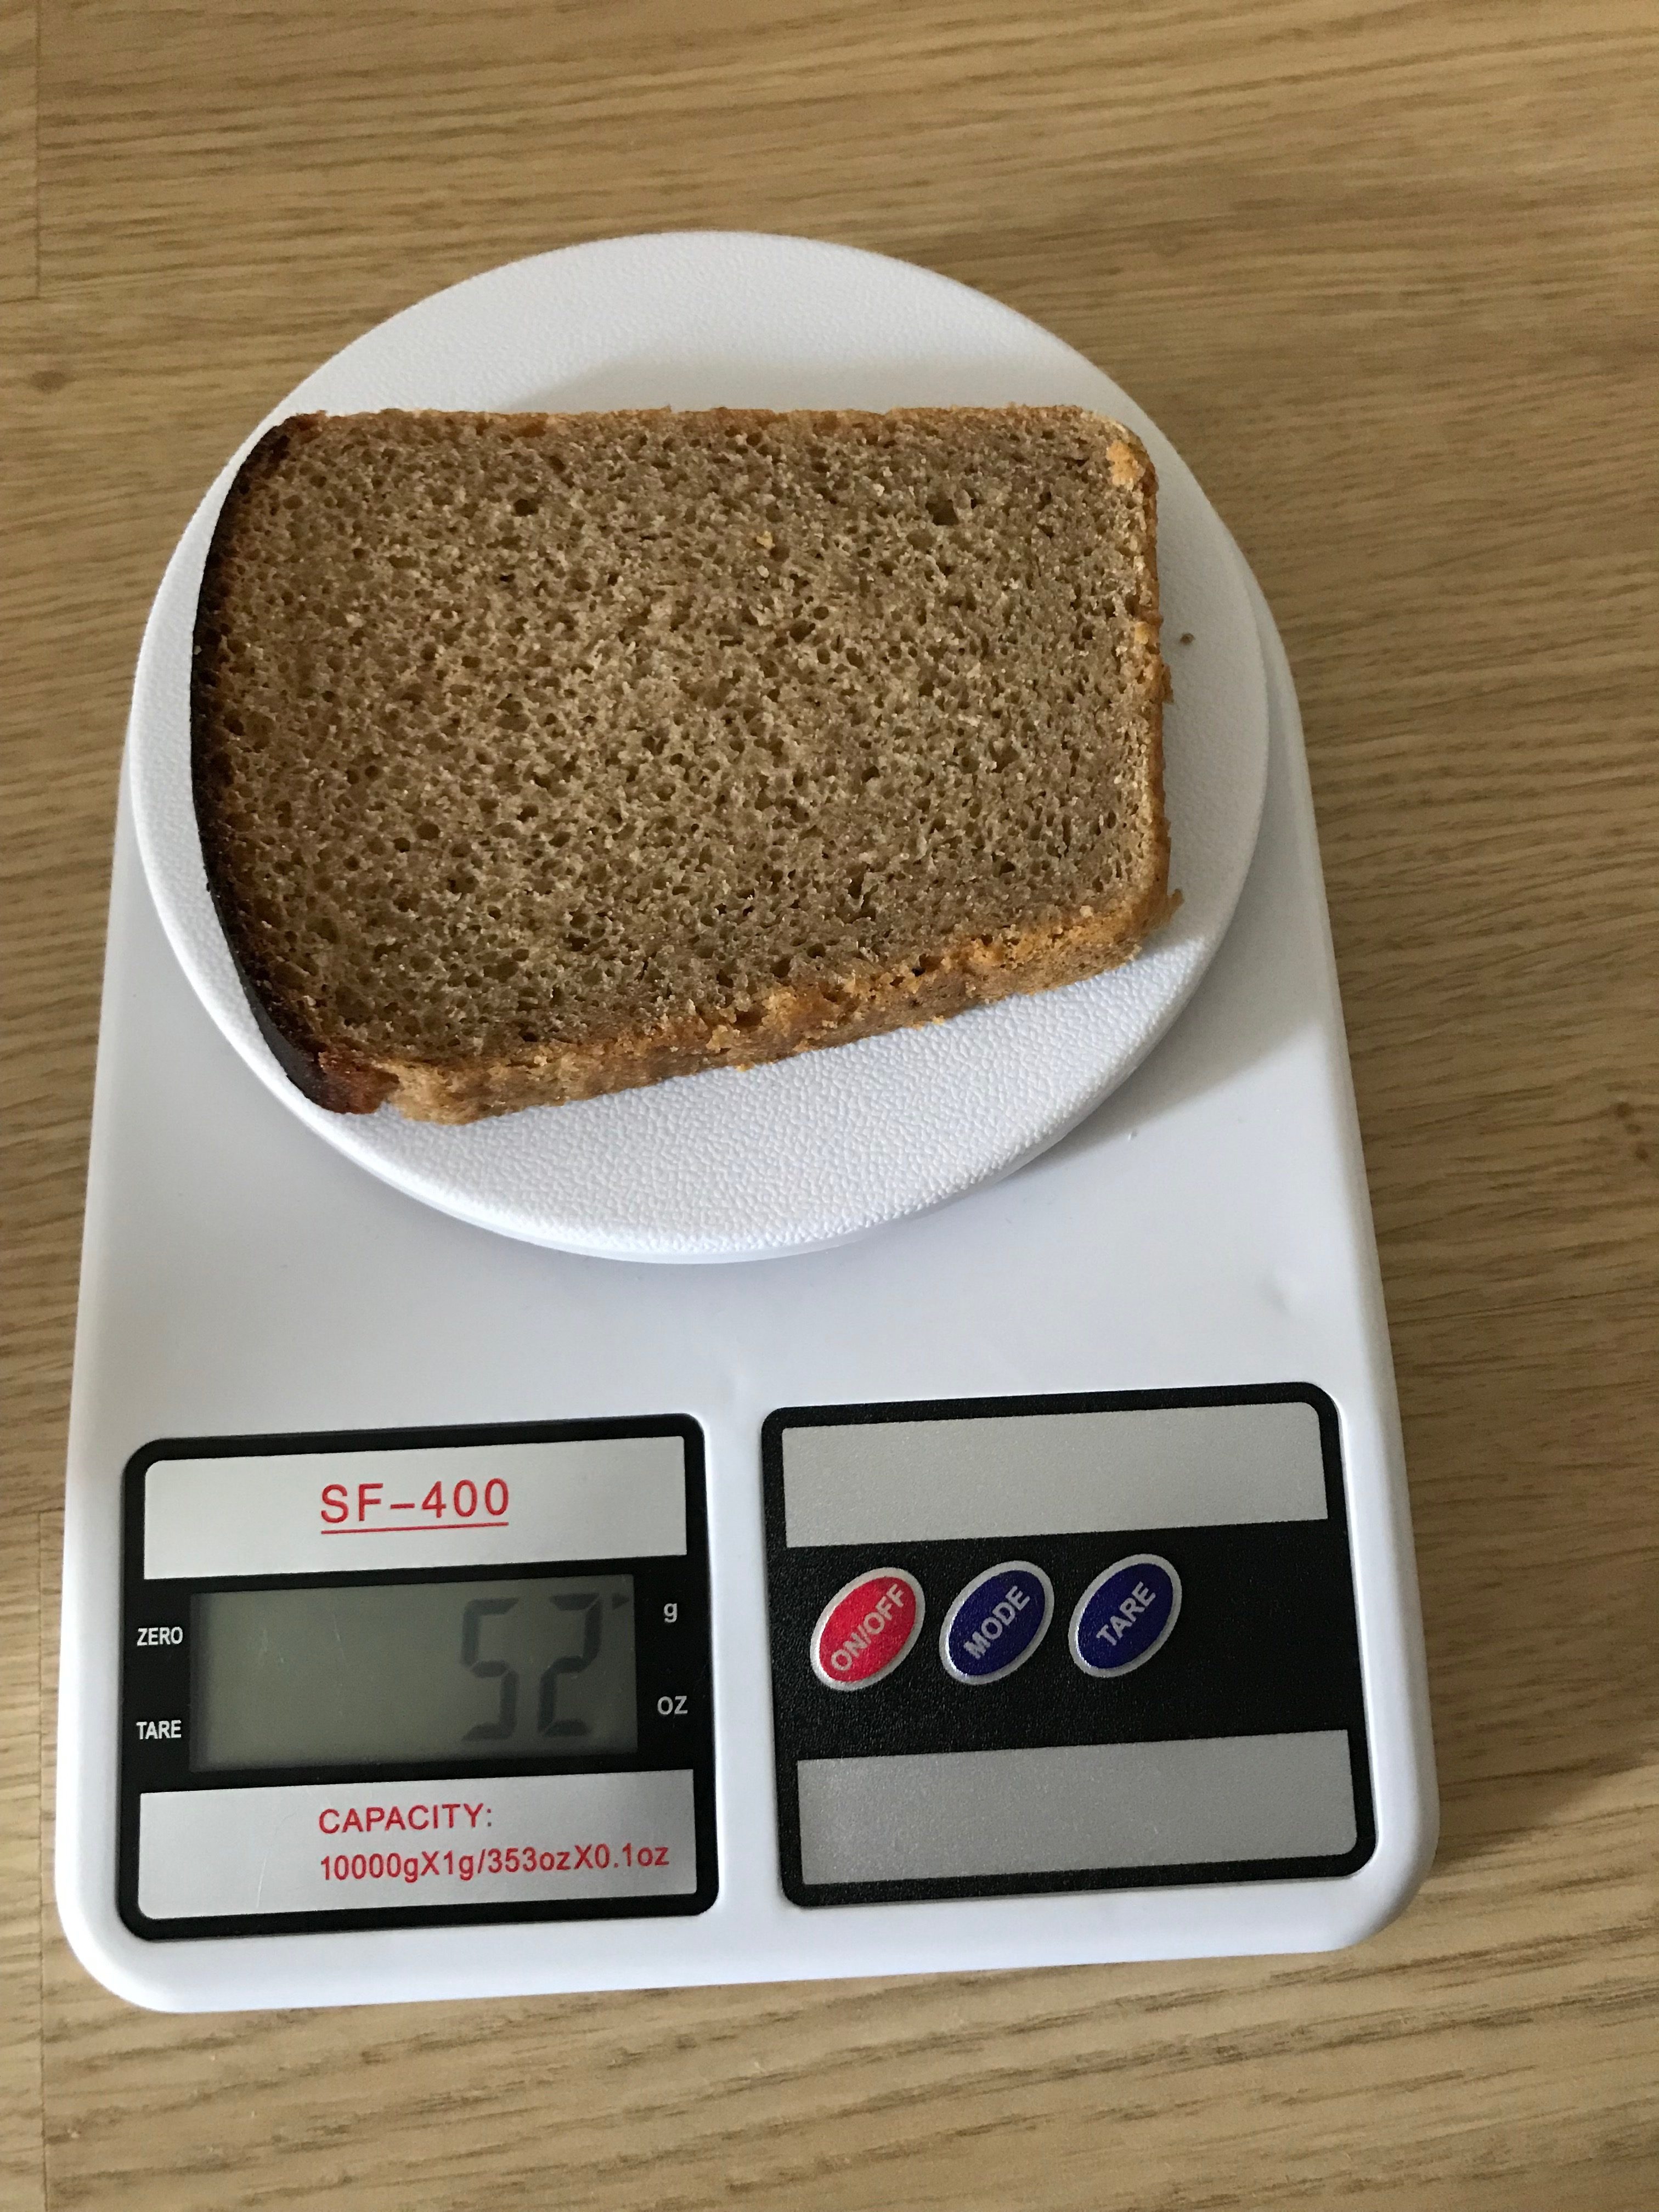 Berapa berat sepotong roti hitam?